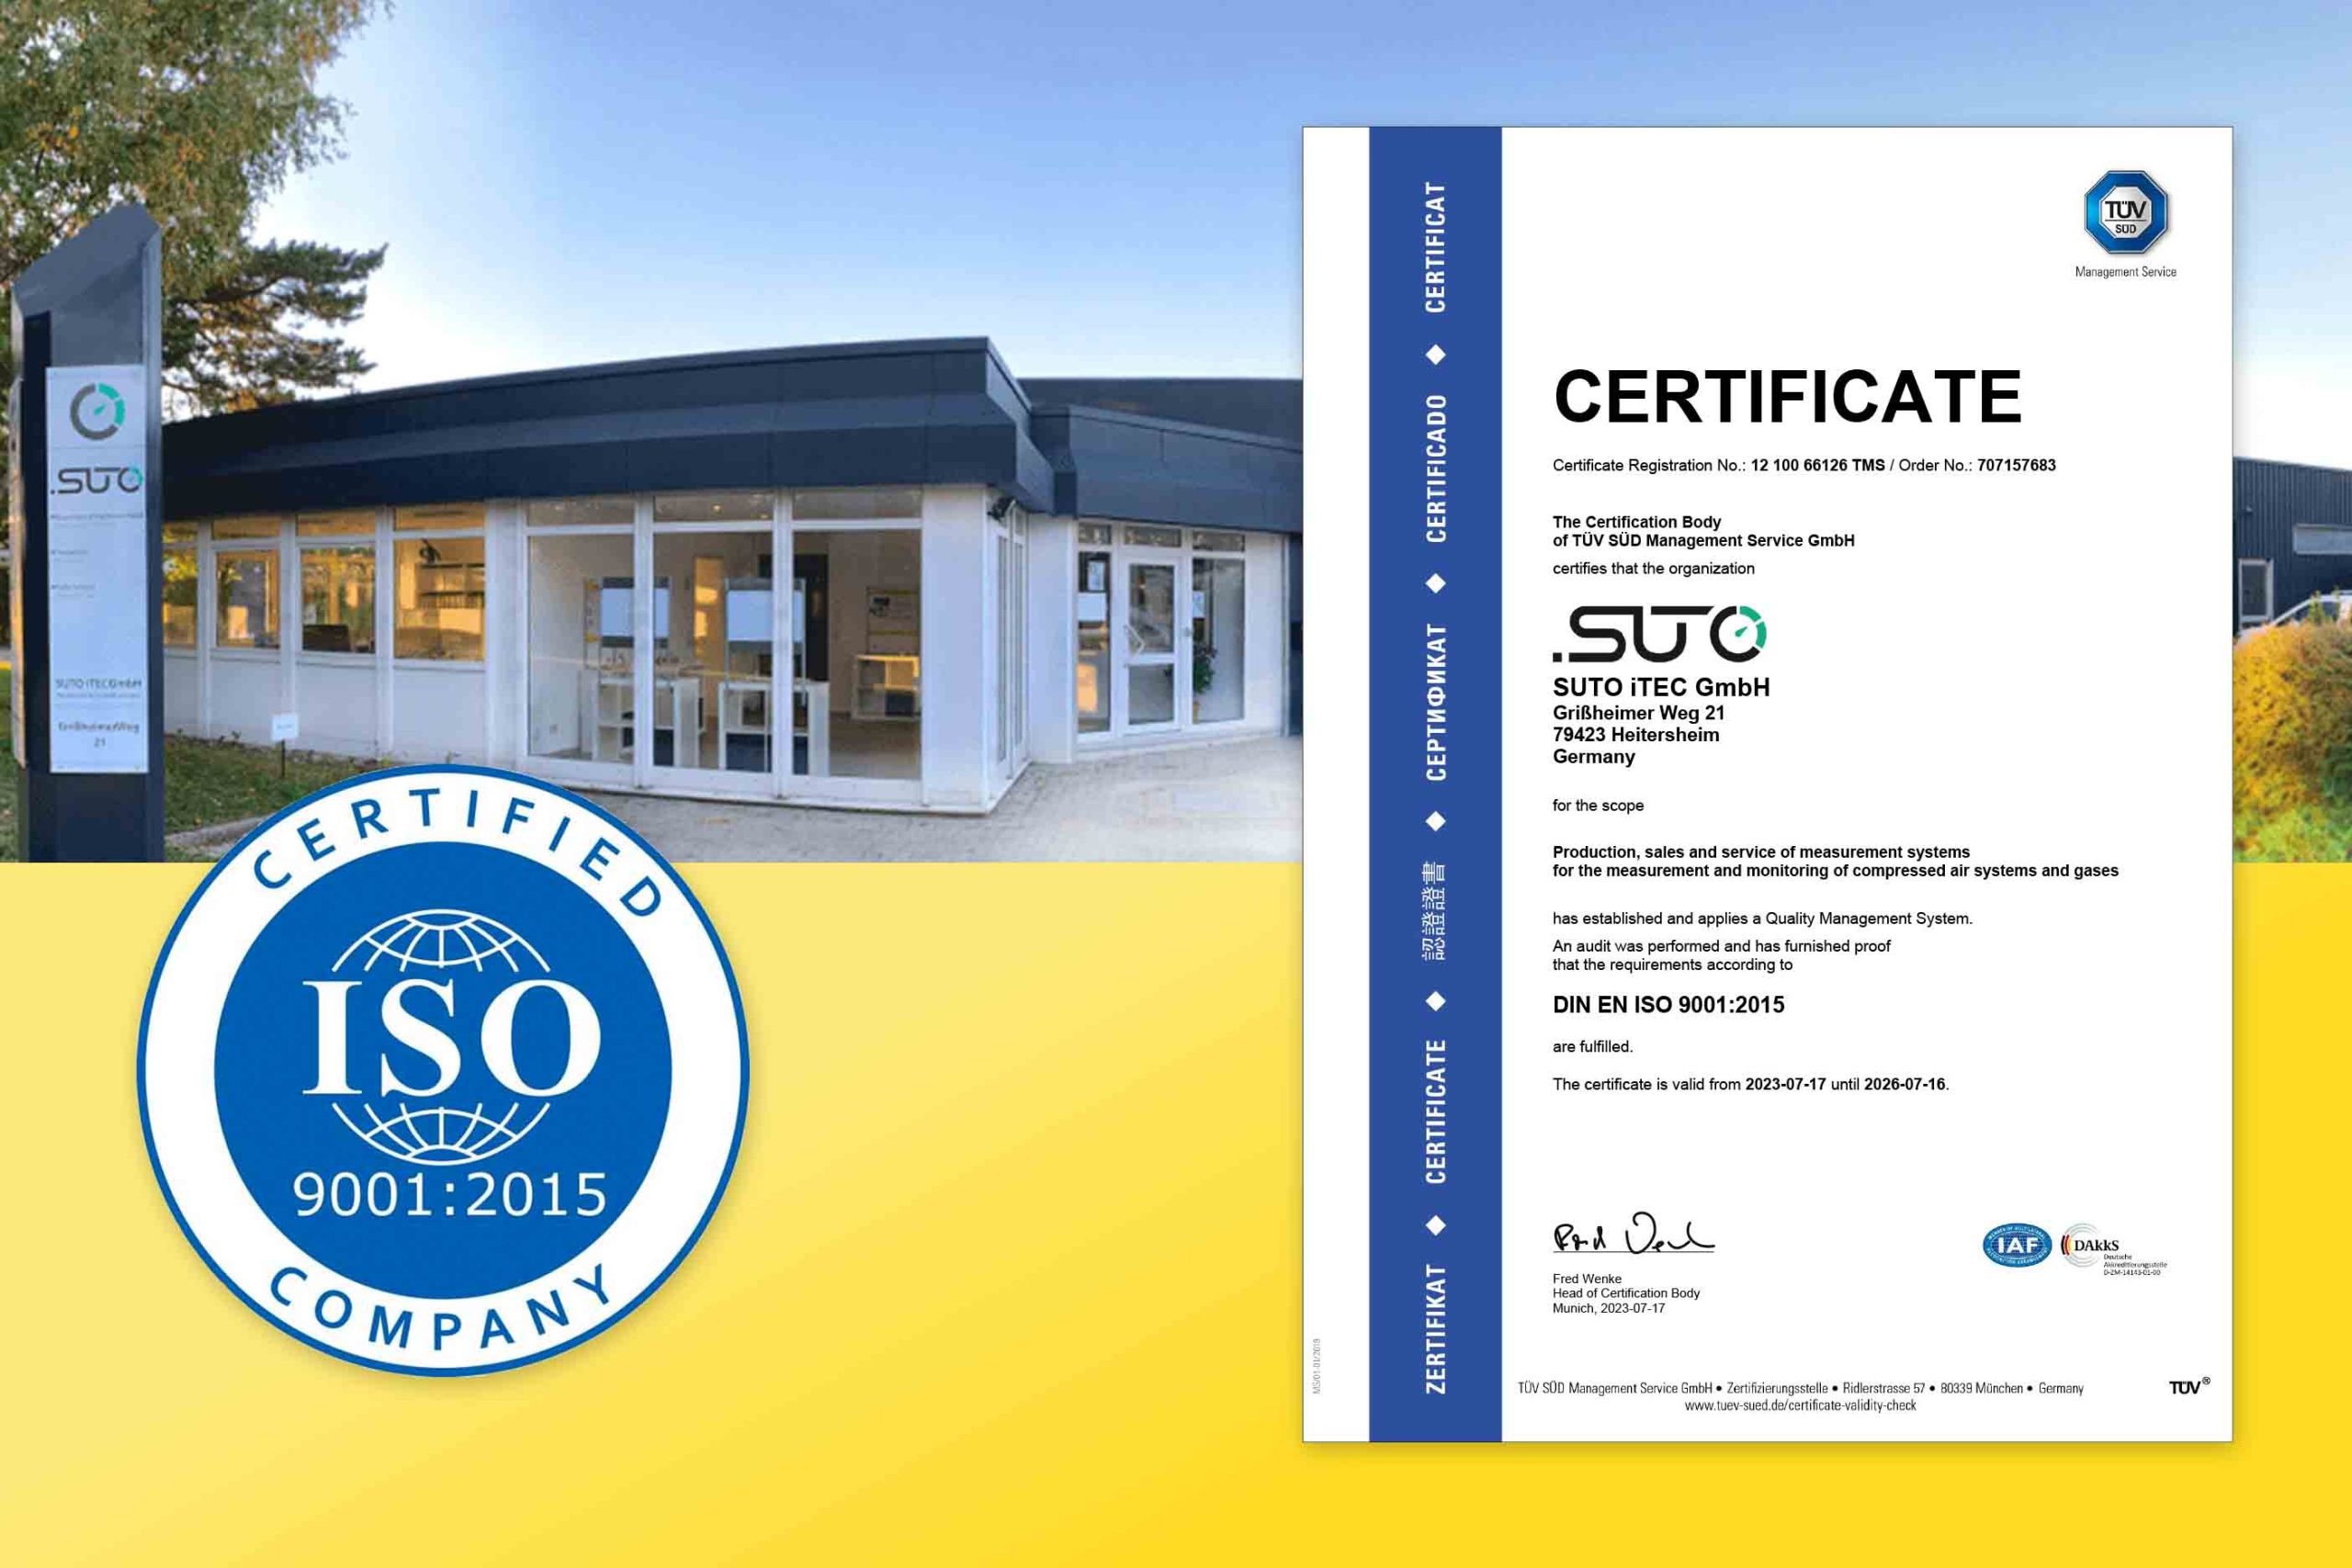 SUTO iTEC Headquaters v Německu získává certifikaci ISO 9001:2015